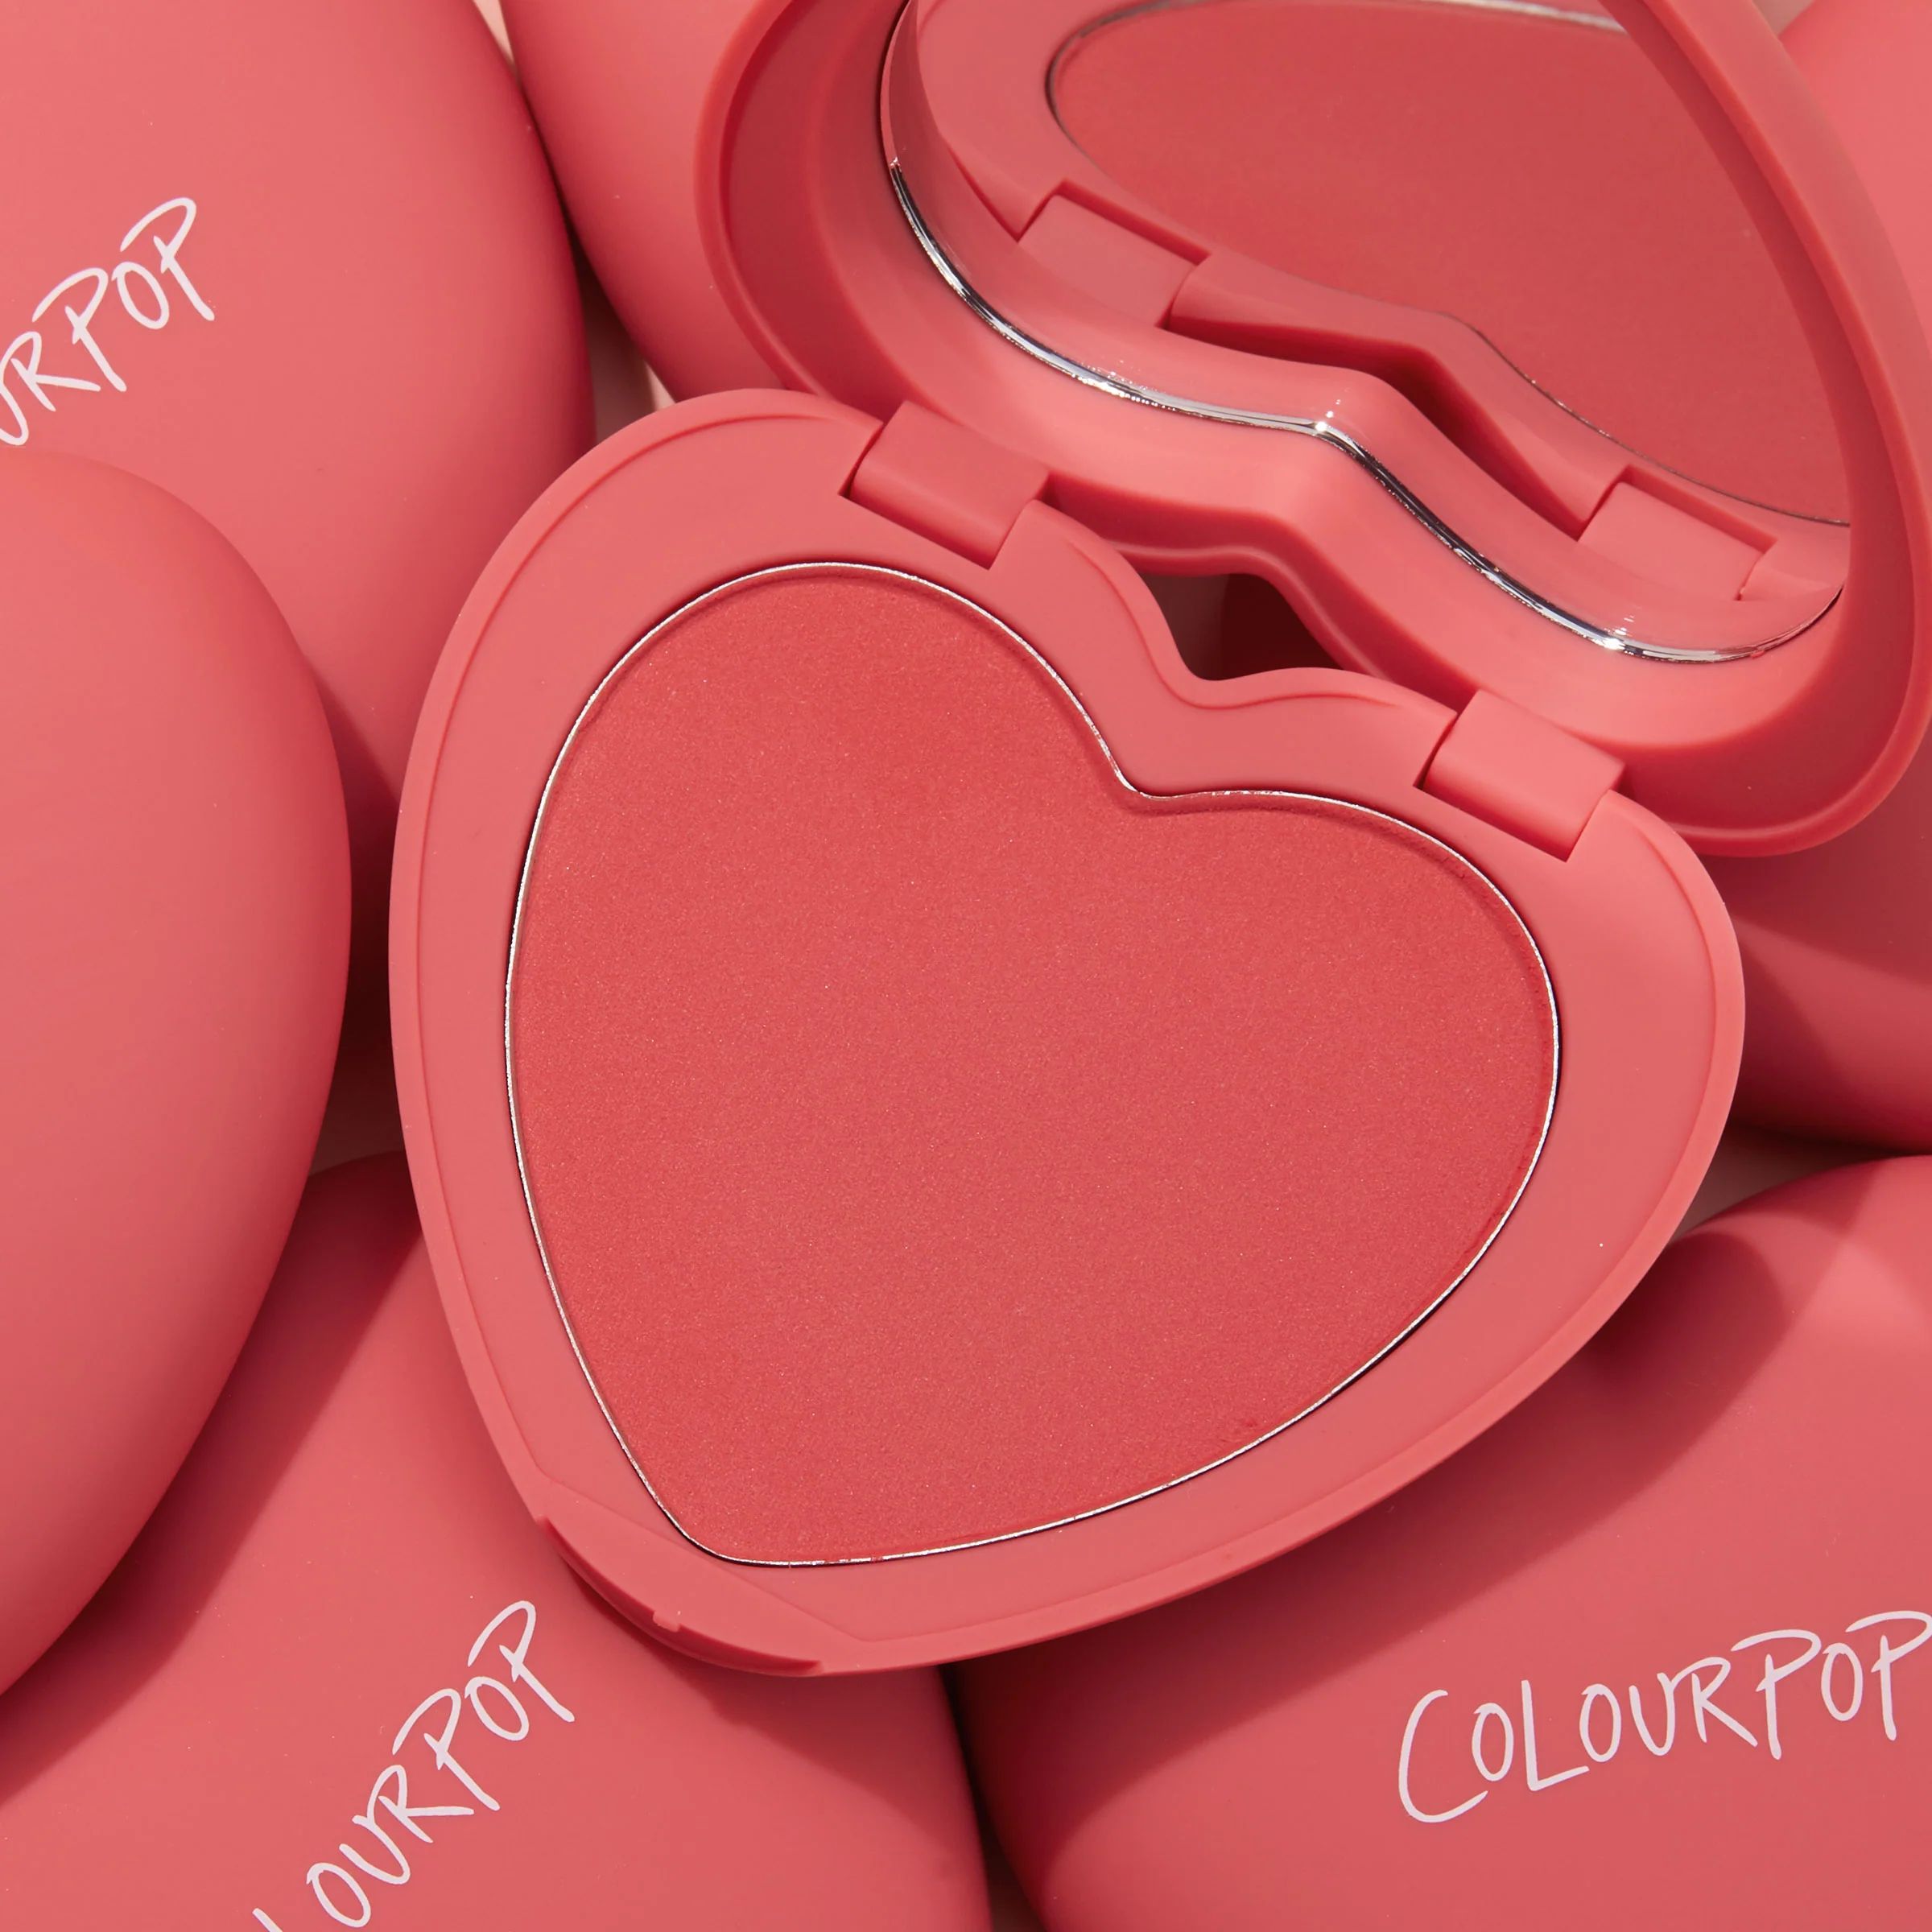 4Ever Yours Pressed Powder Blush | Colourpop